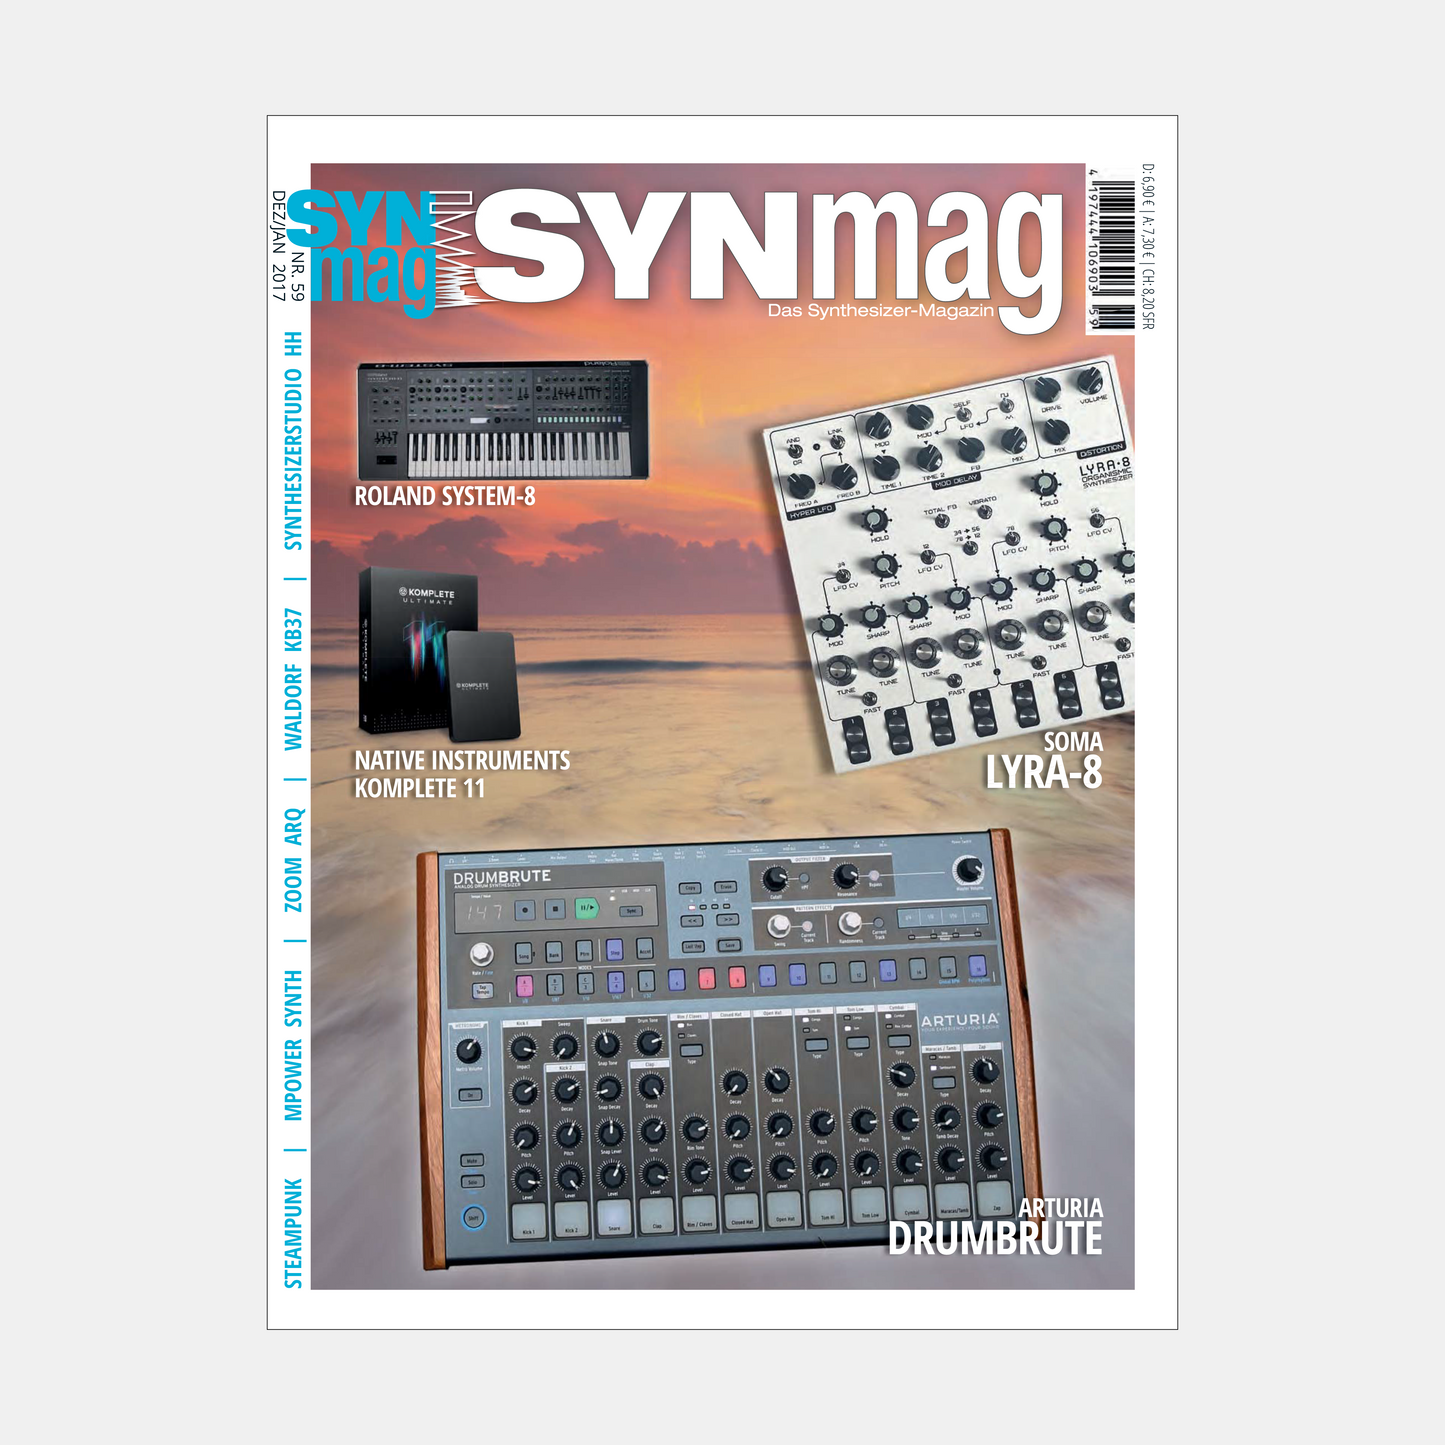 Synmag | Ausgabe 59 | Dezember 2016 | ePaper